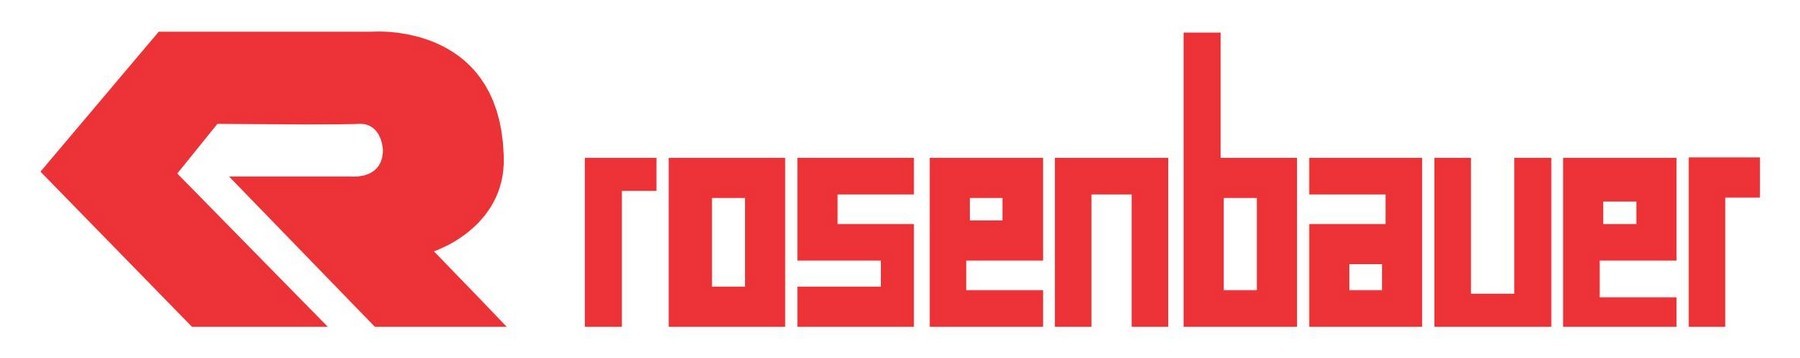 rosenbauer logo